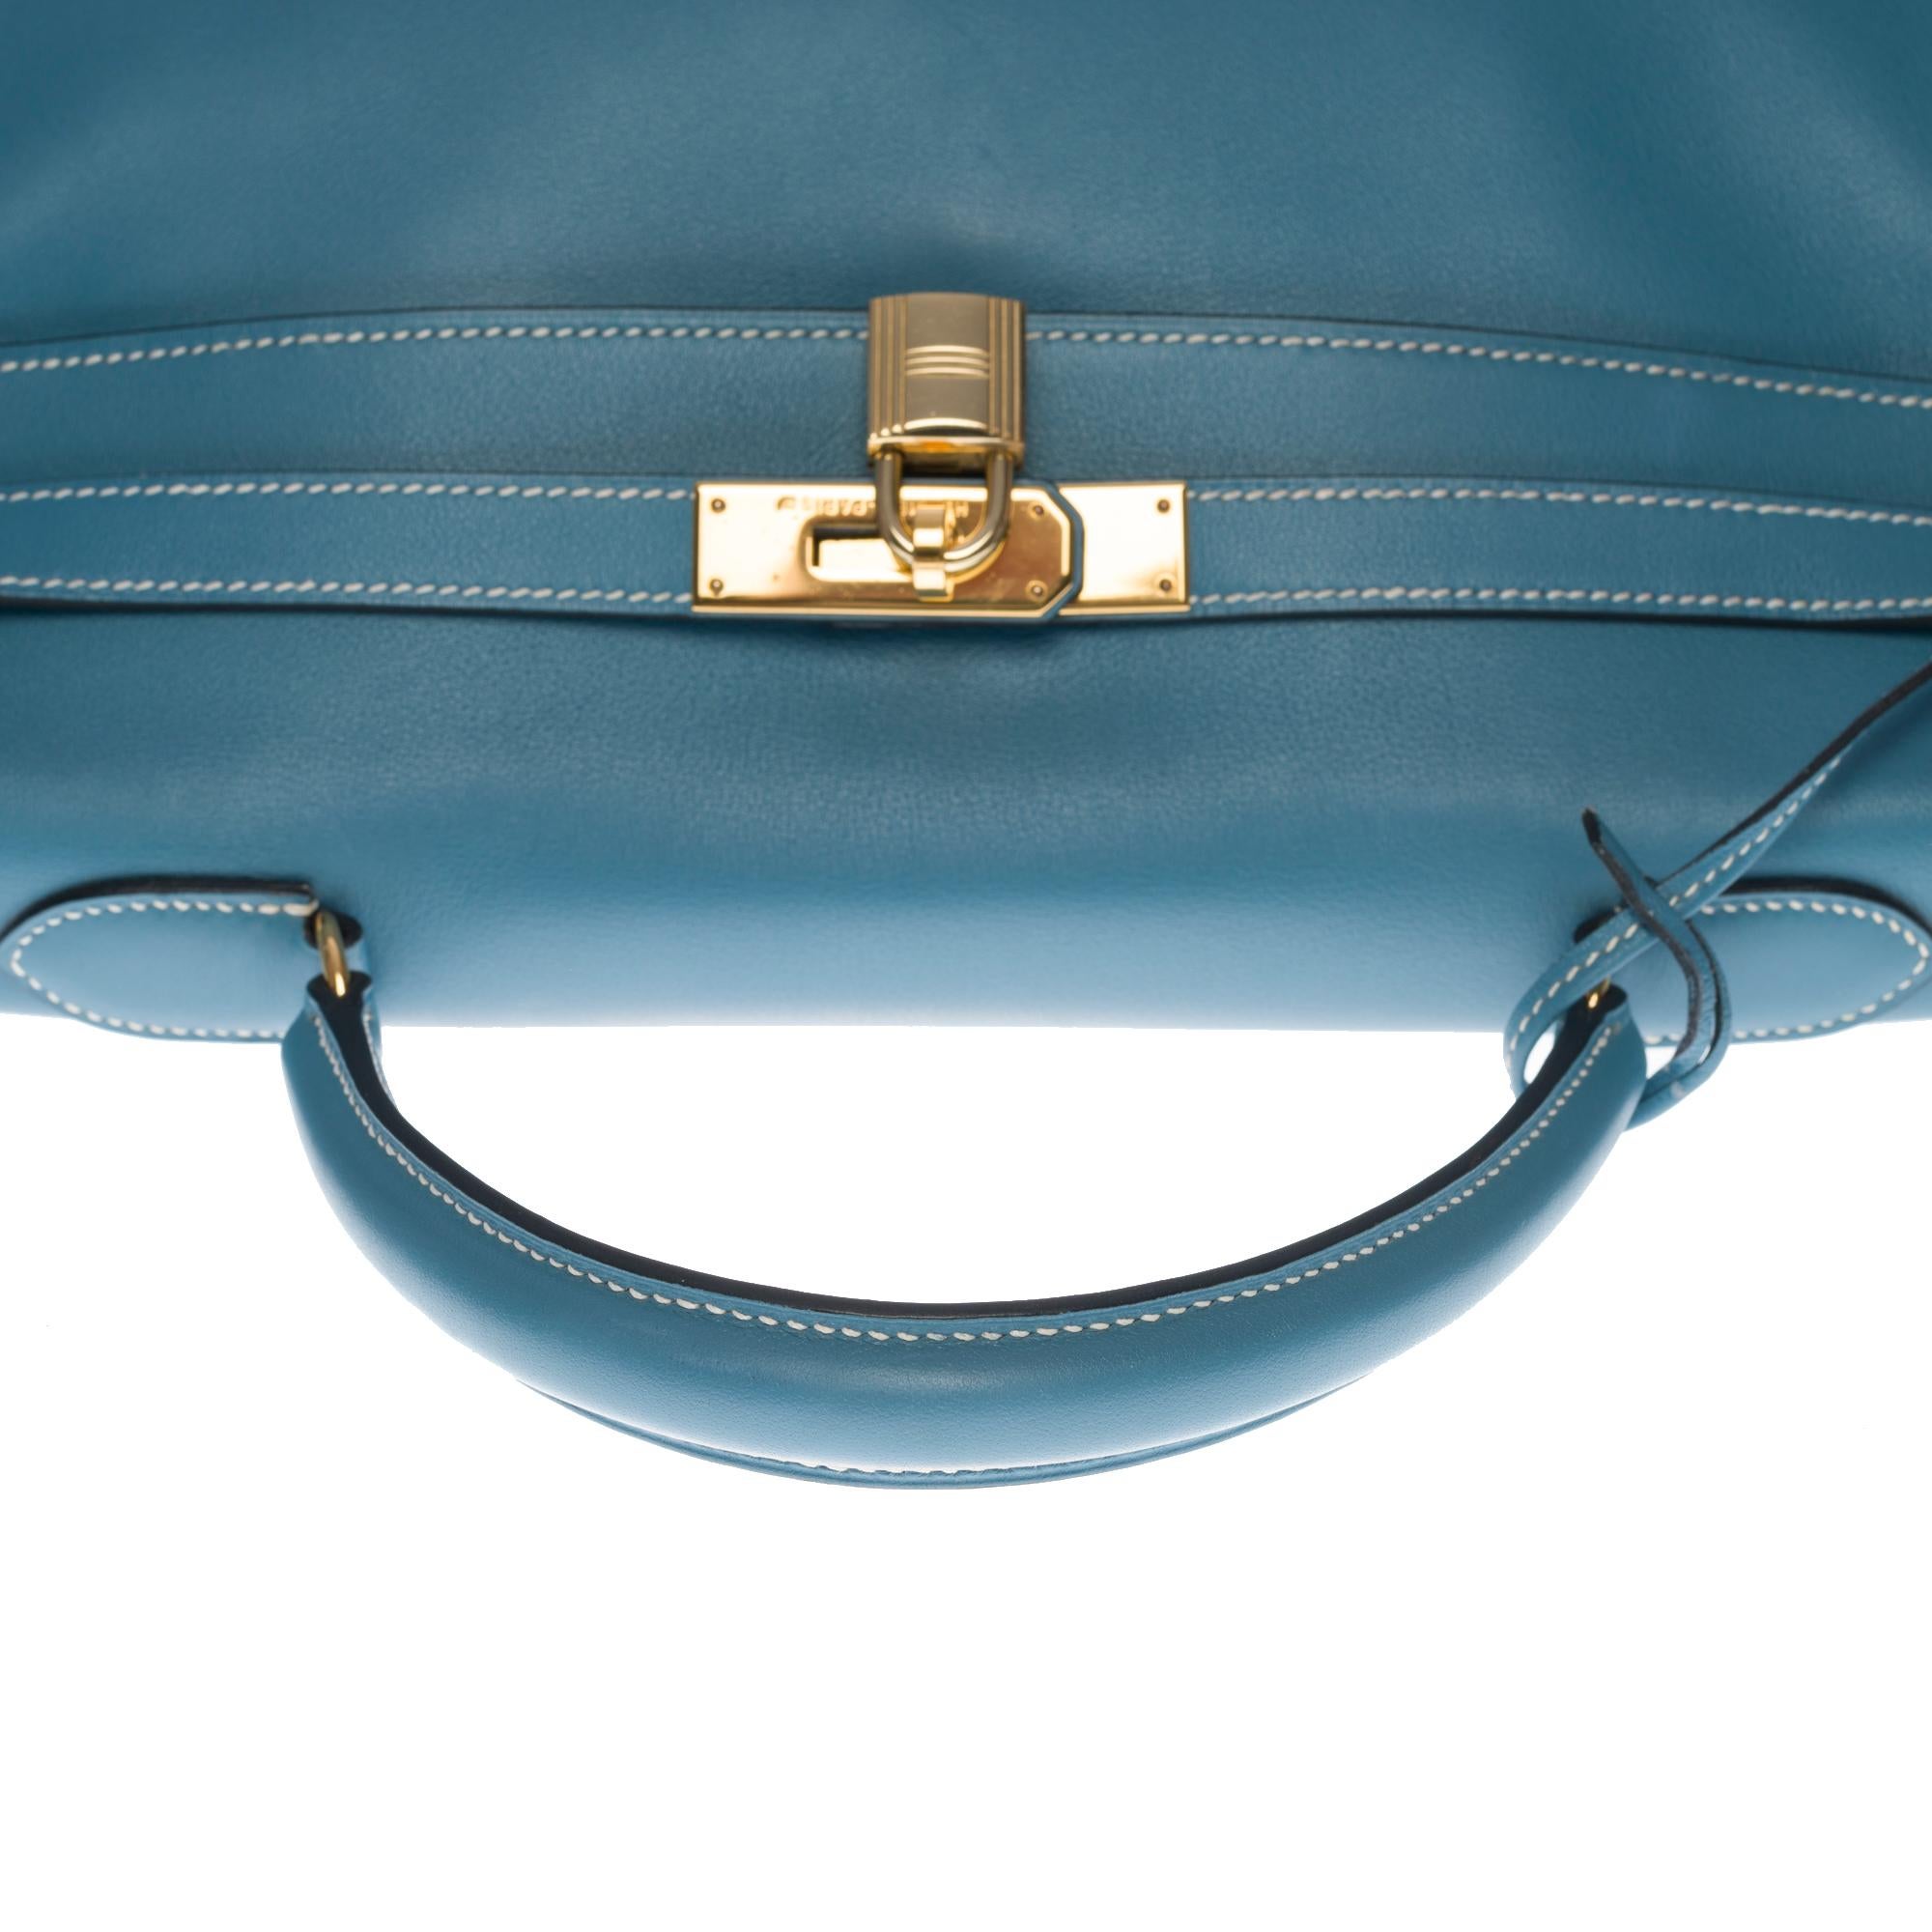 Gorgeous Hermès Kelly 35 retourné handbag strap in blue jeans Swift ...